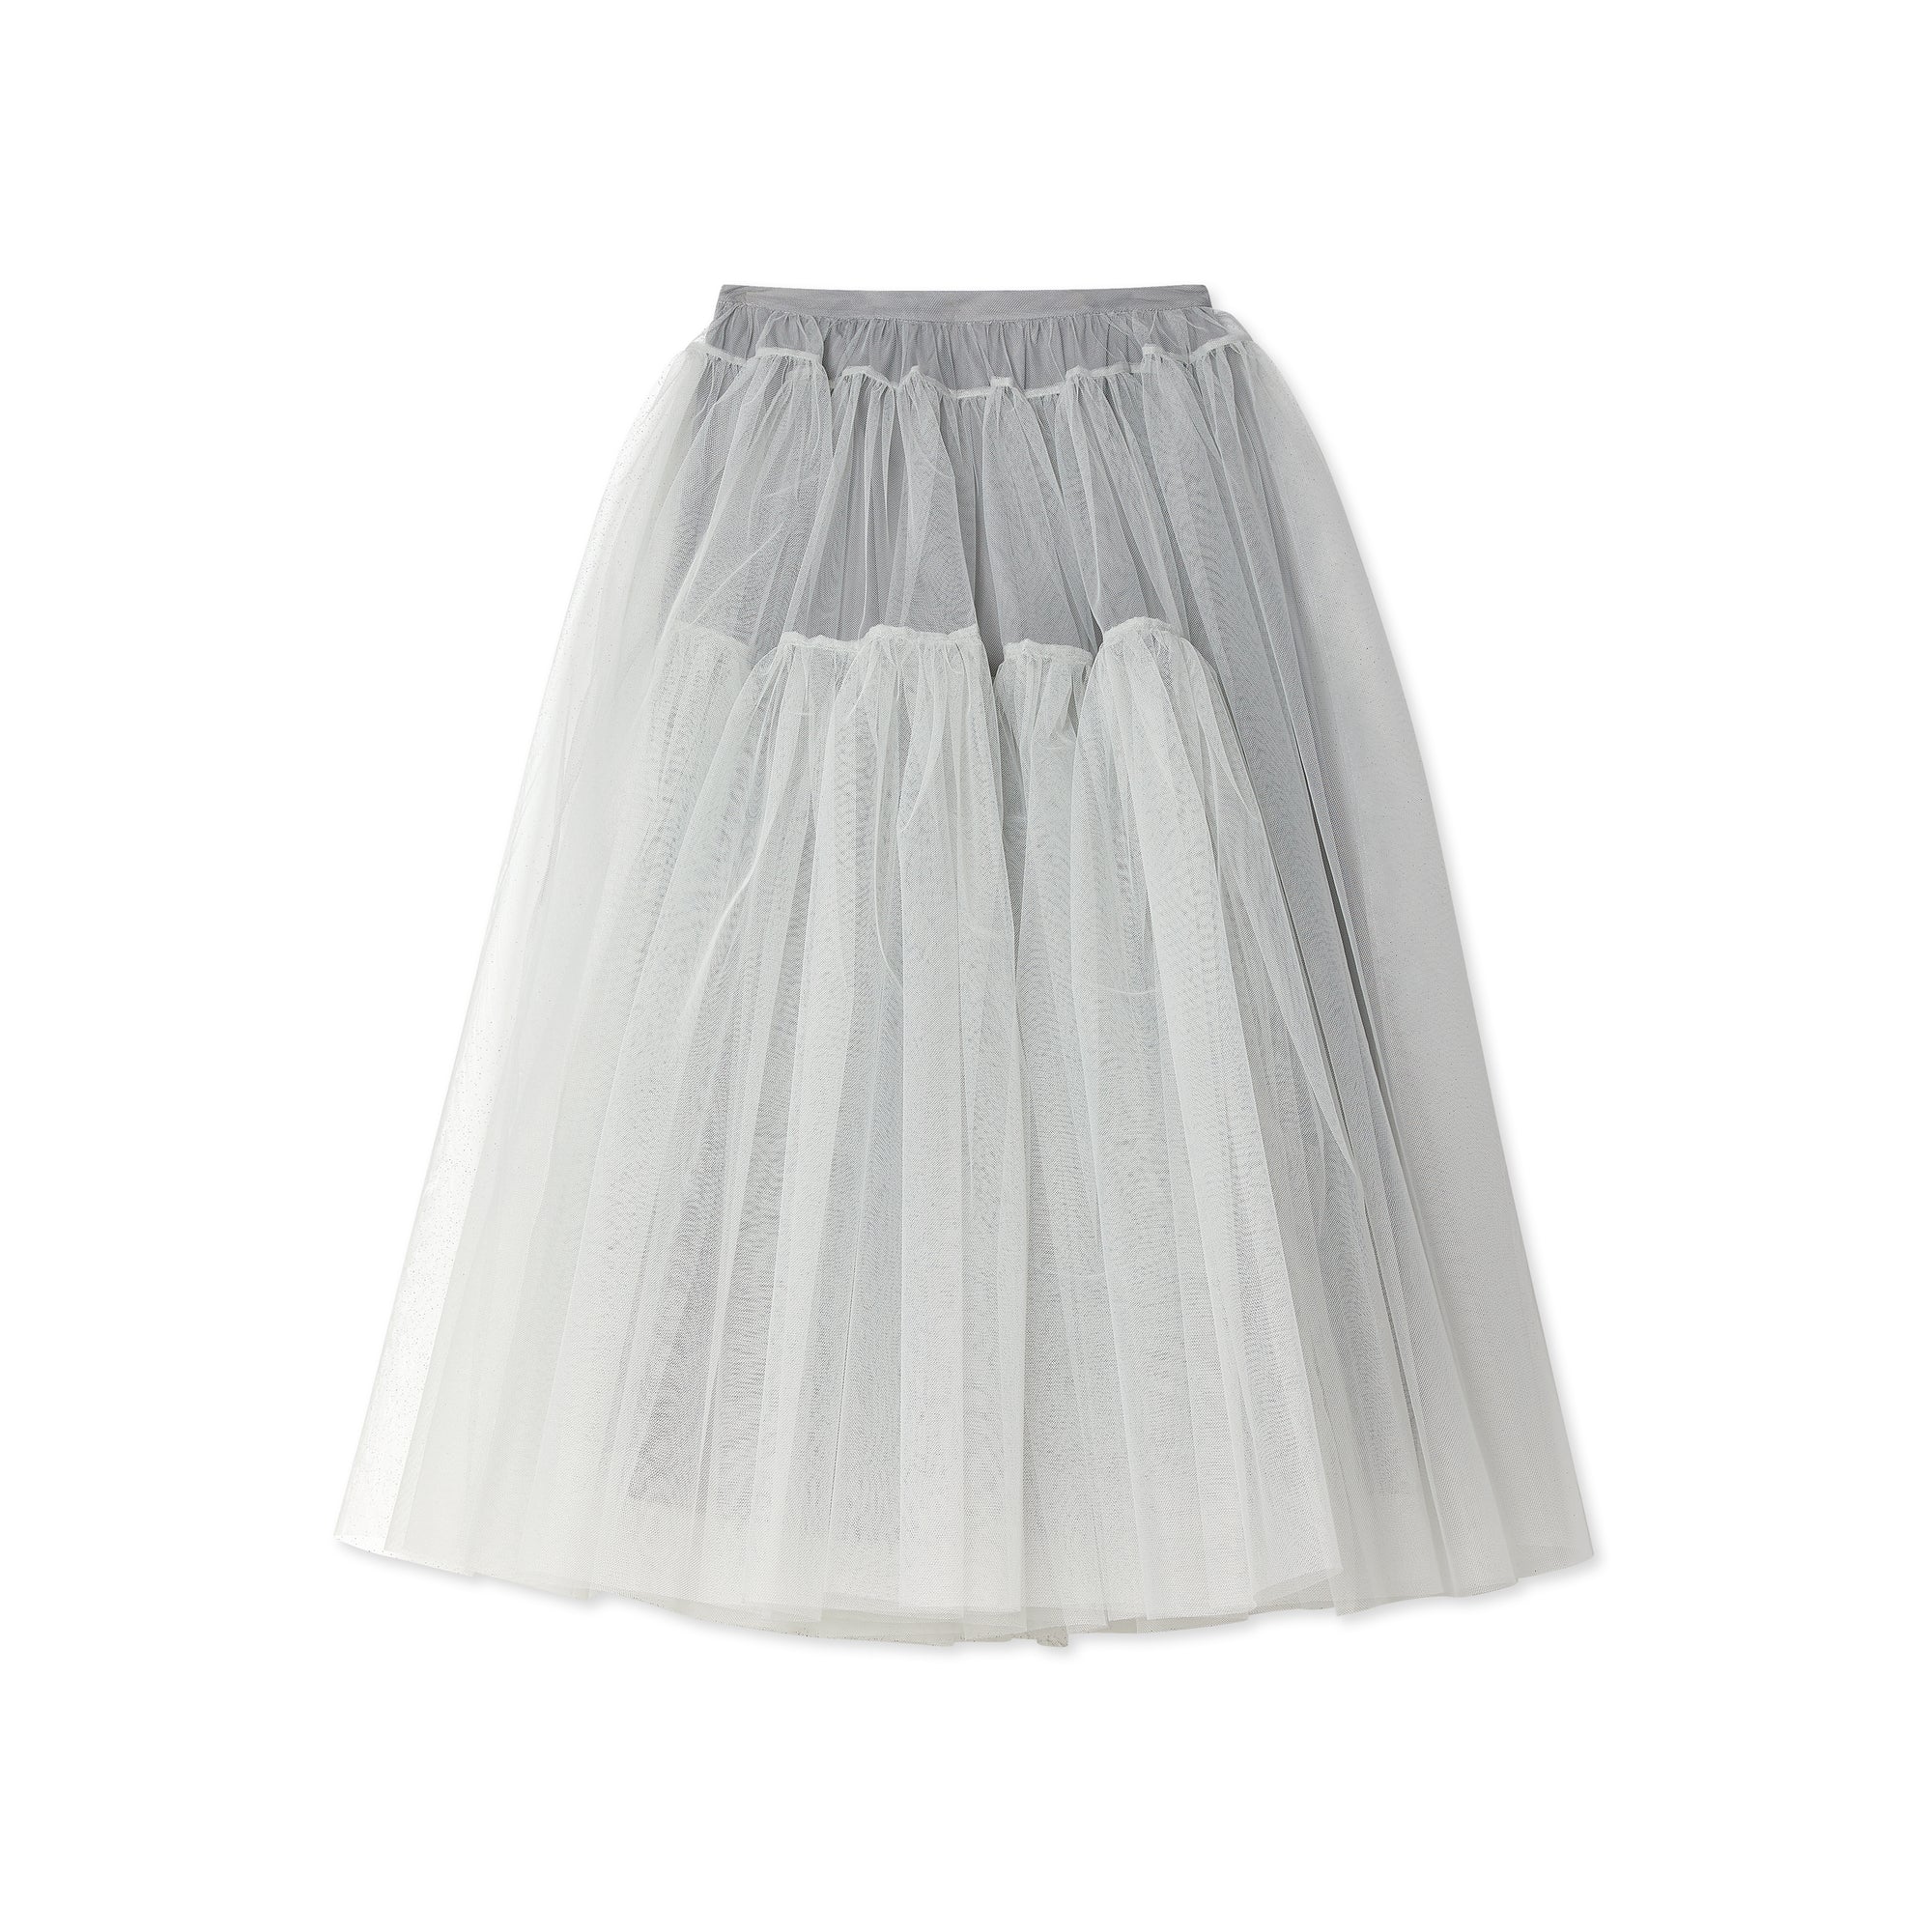 Molly Goddard - Women's Ula Tulle Long Skirt - (Grey) view 2